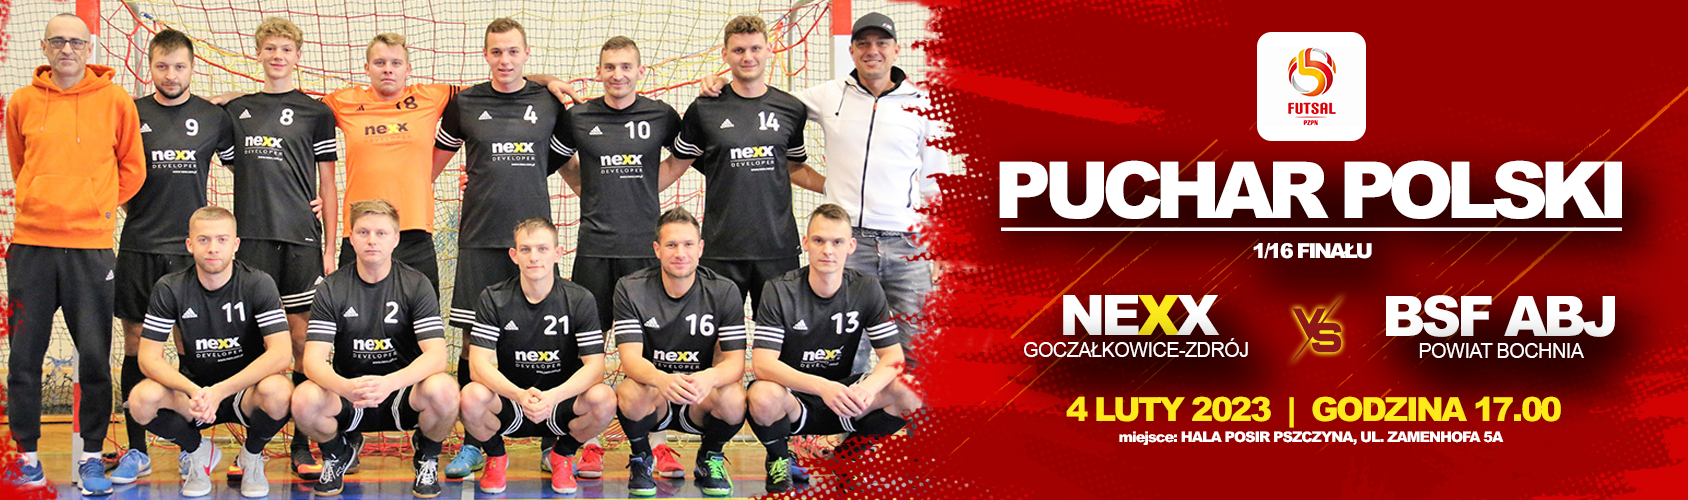 Puchar Polski: NEXX - BSF ABJ Bochnia - baner informacyjny